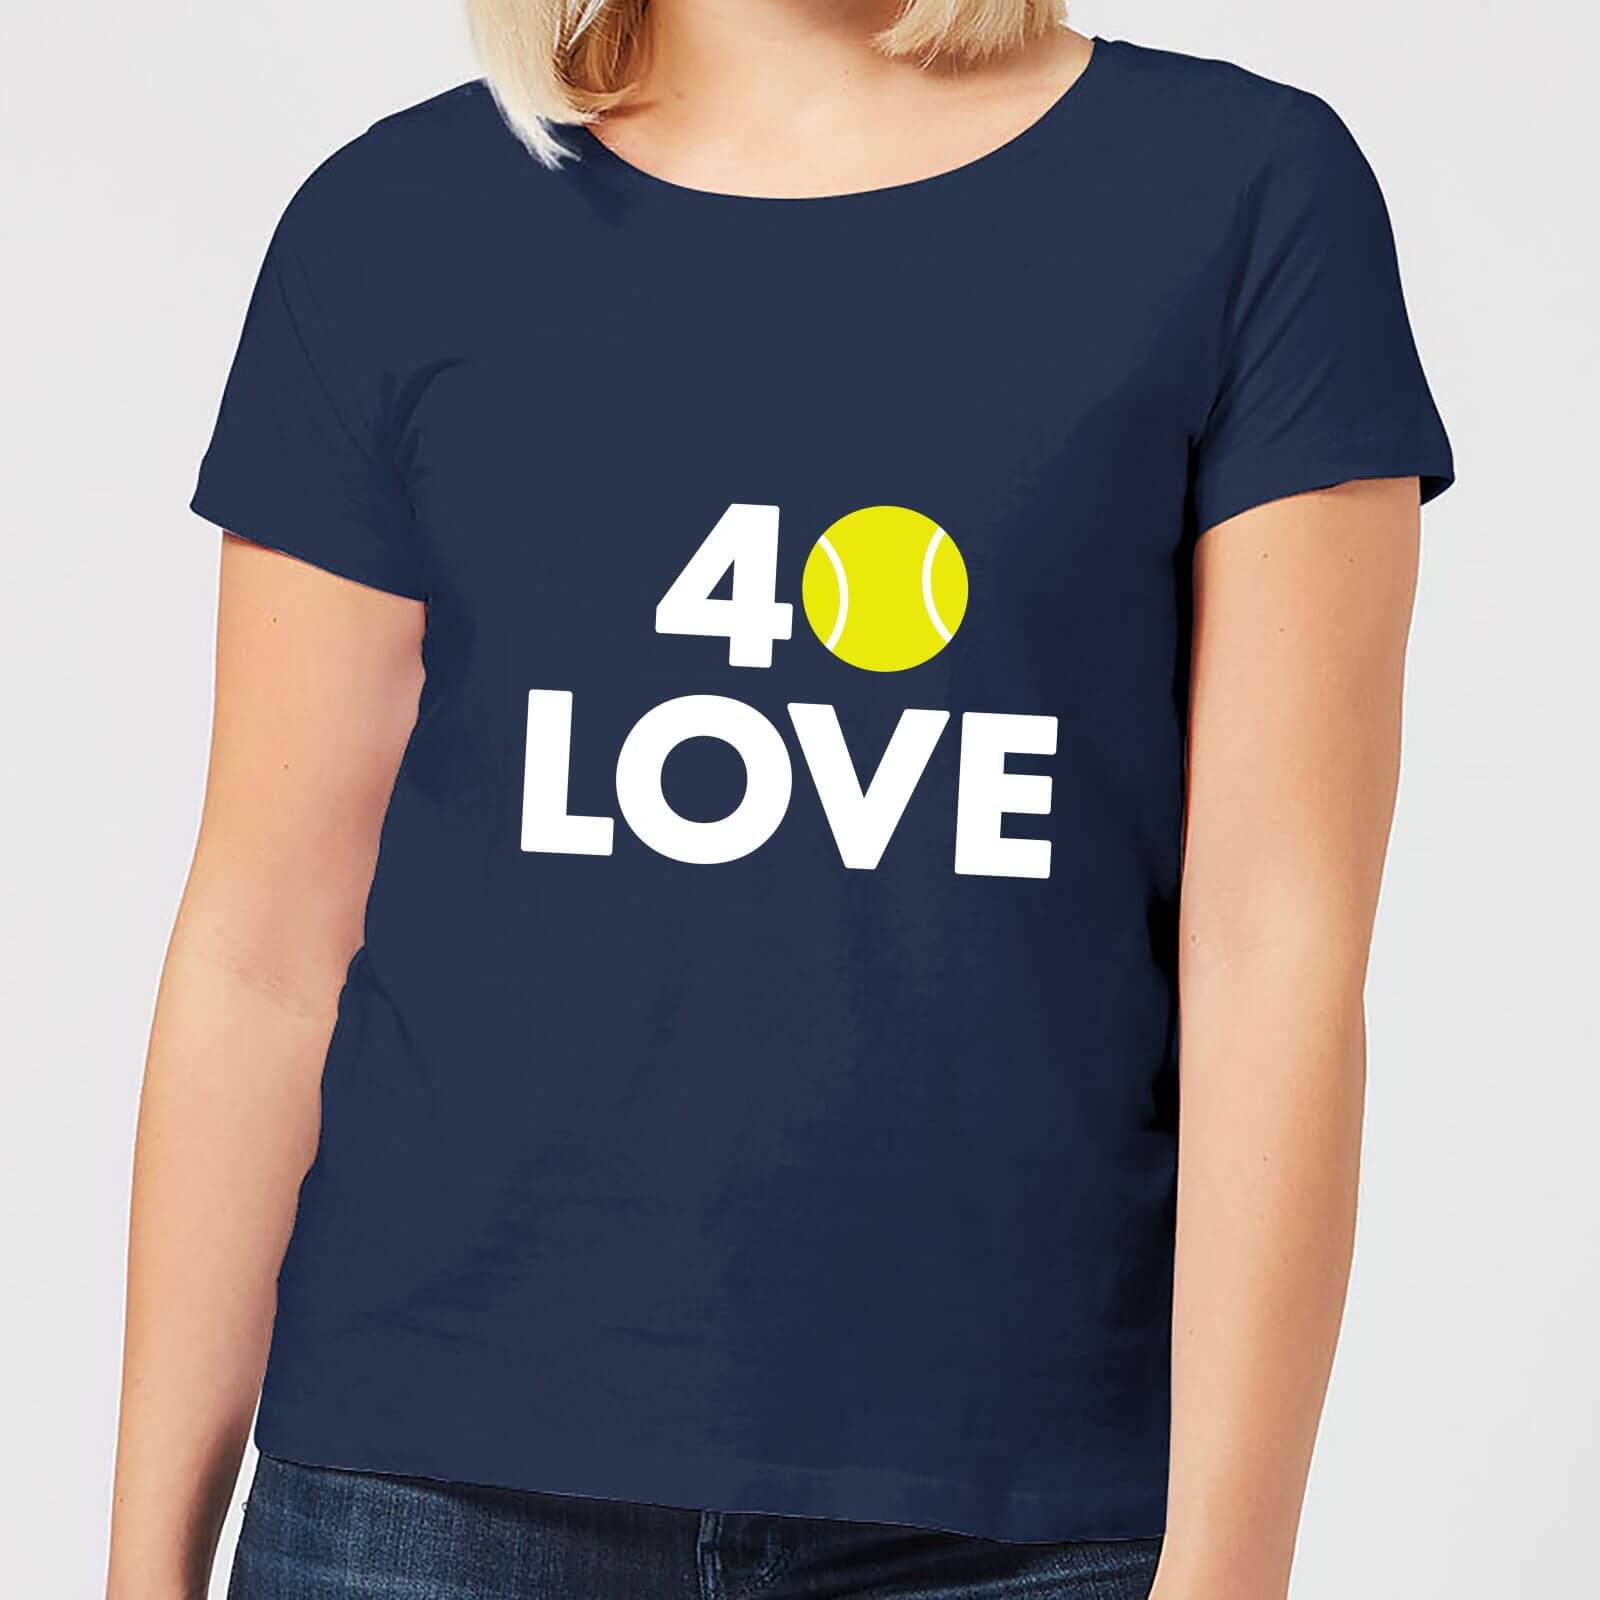 40 Love Women's T-Shirt - Navy - S - Navy